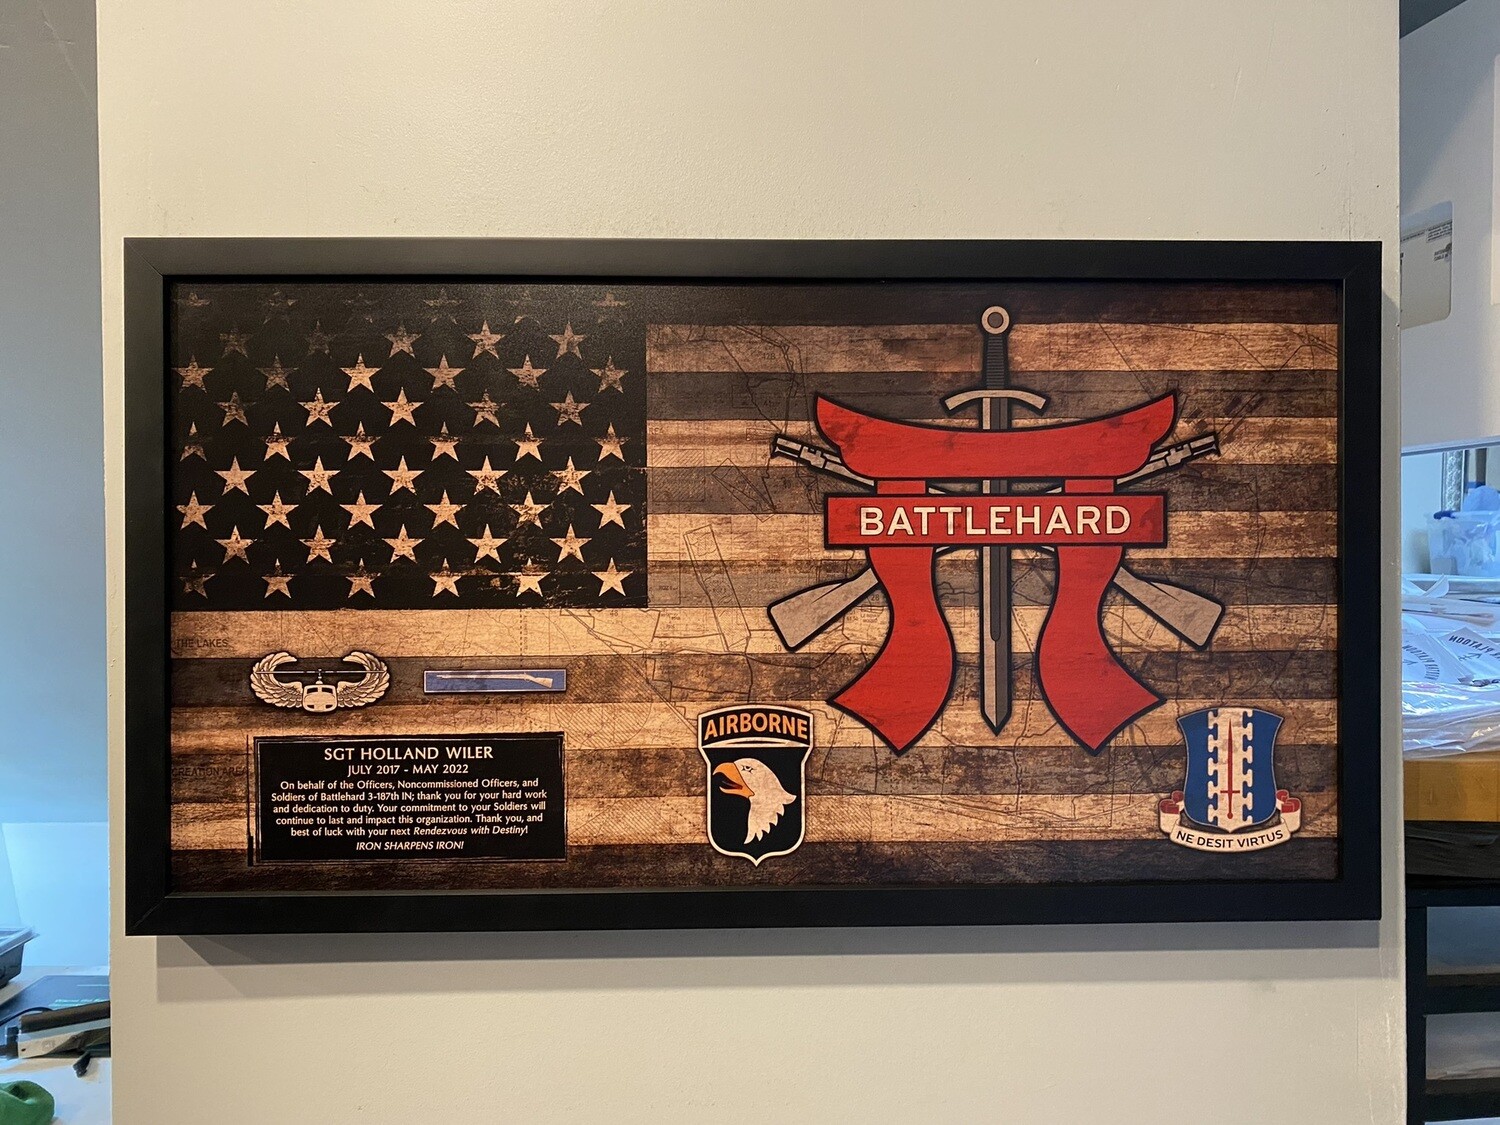 B Co "Battlehard" 3-187 IN Rustic Flag Plaque - 28.5"x15.75"